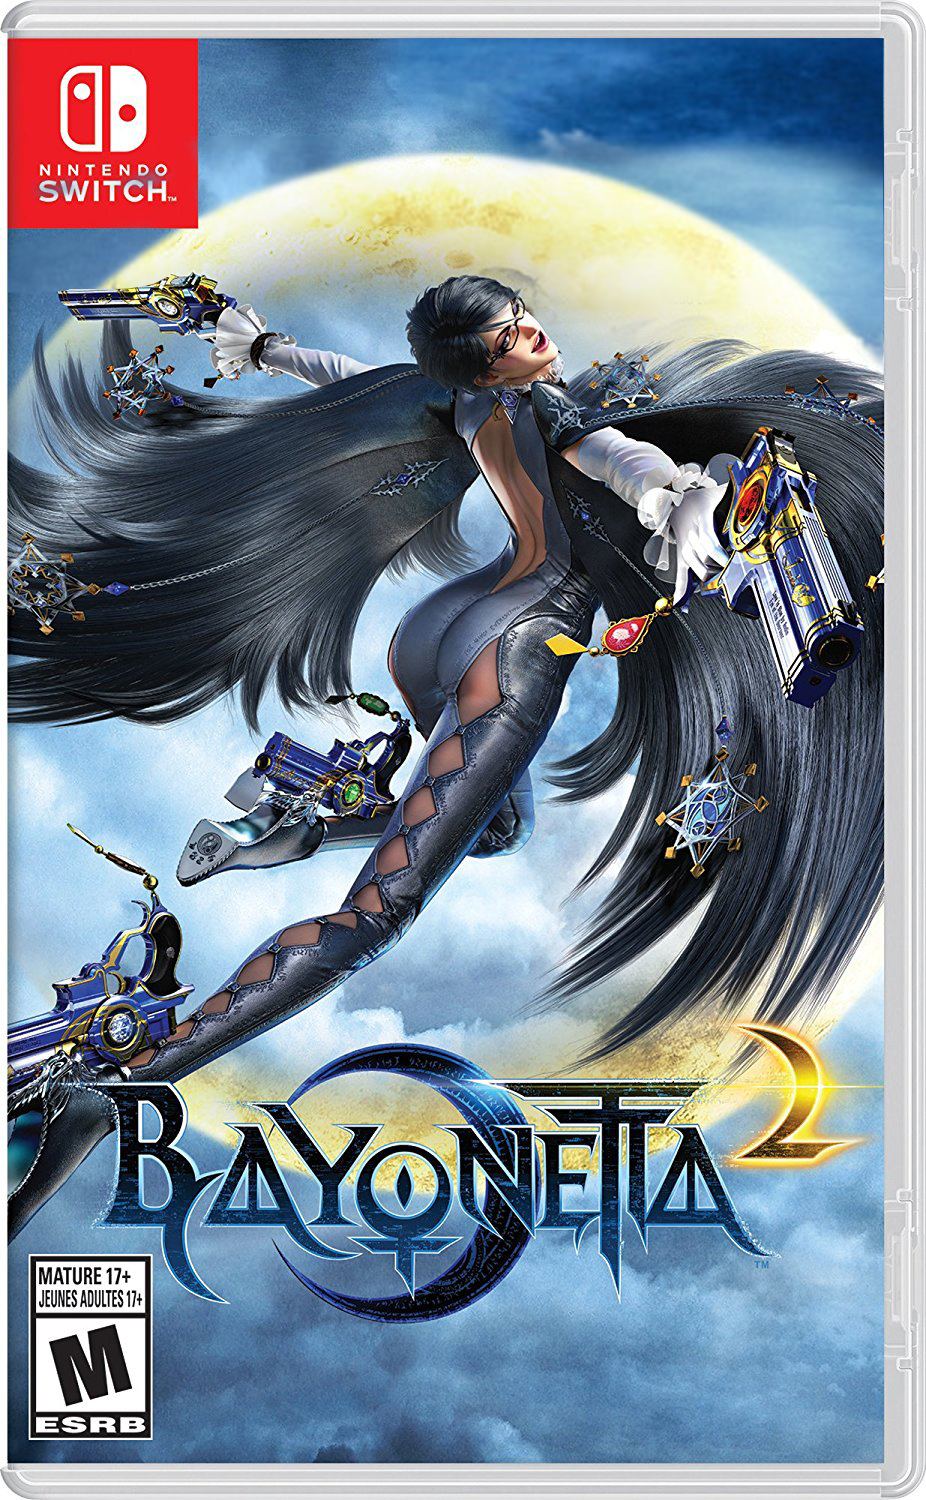 one-day sale of bayonetta 2